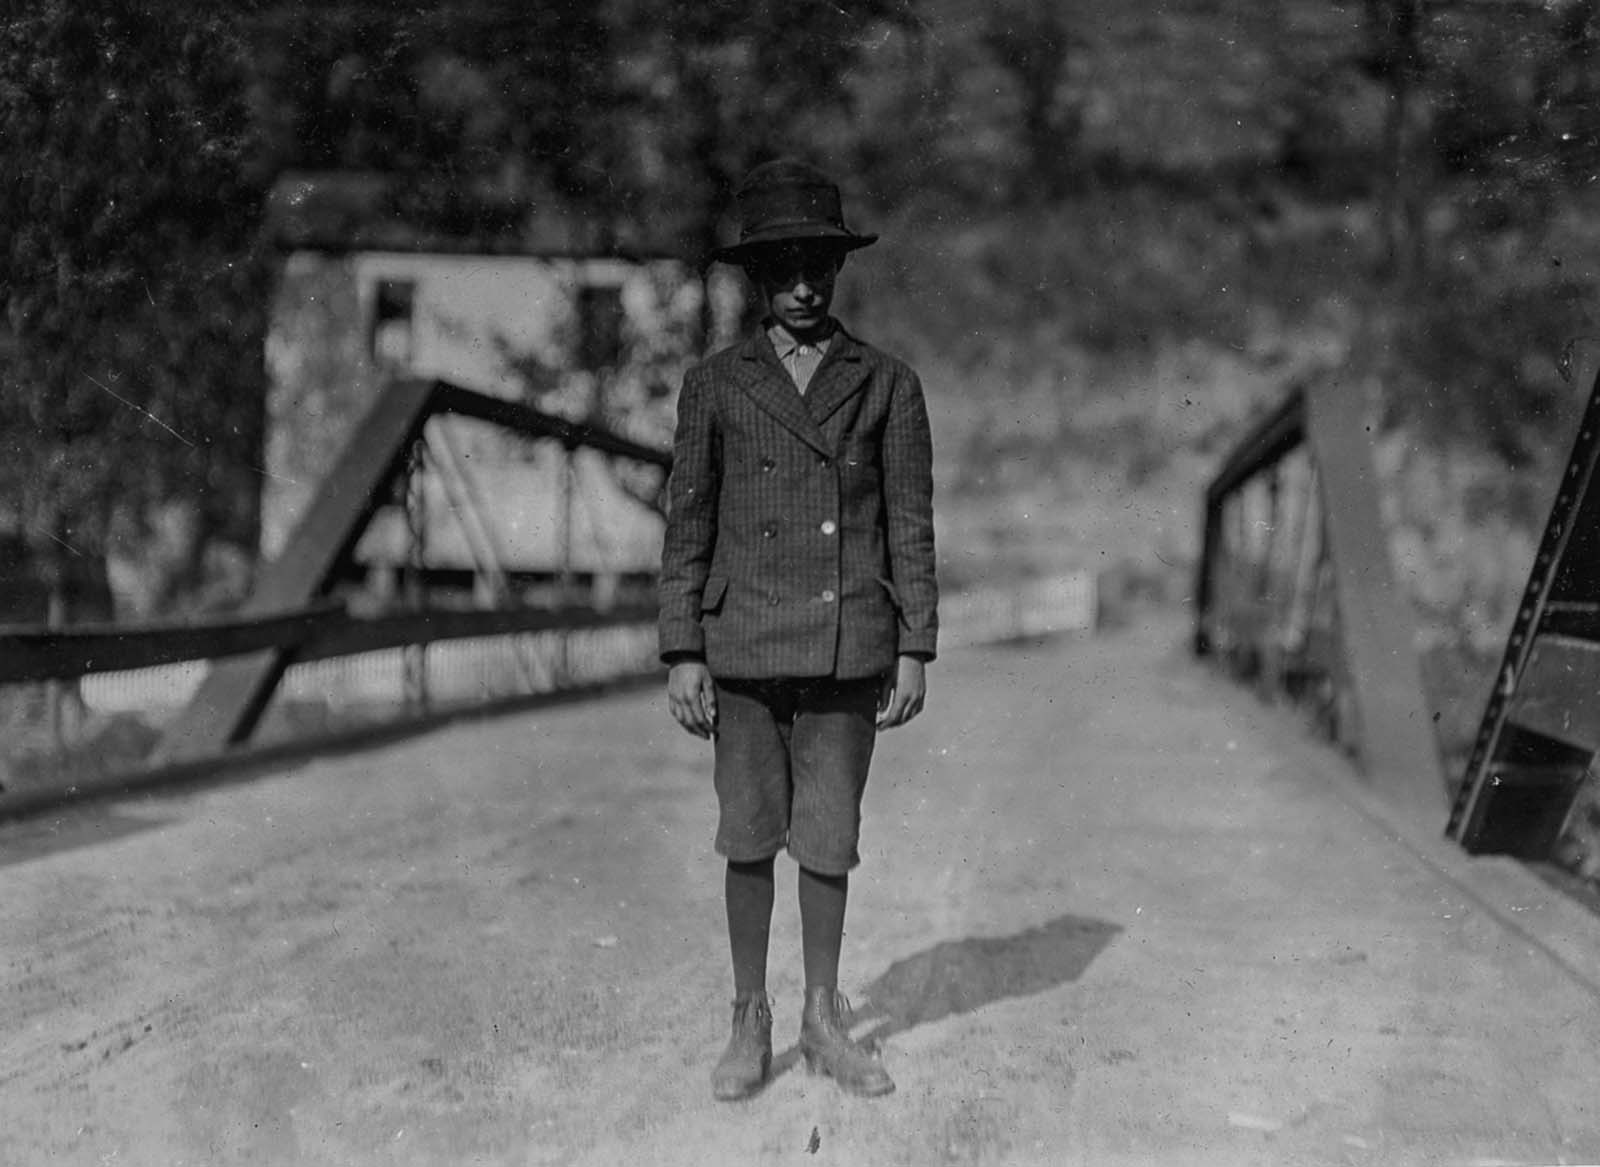 Arlie Fankins, 14, a shoveler in Barnesville Mine in West Virginia, 1908